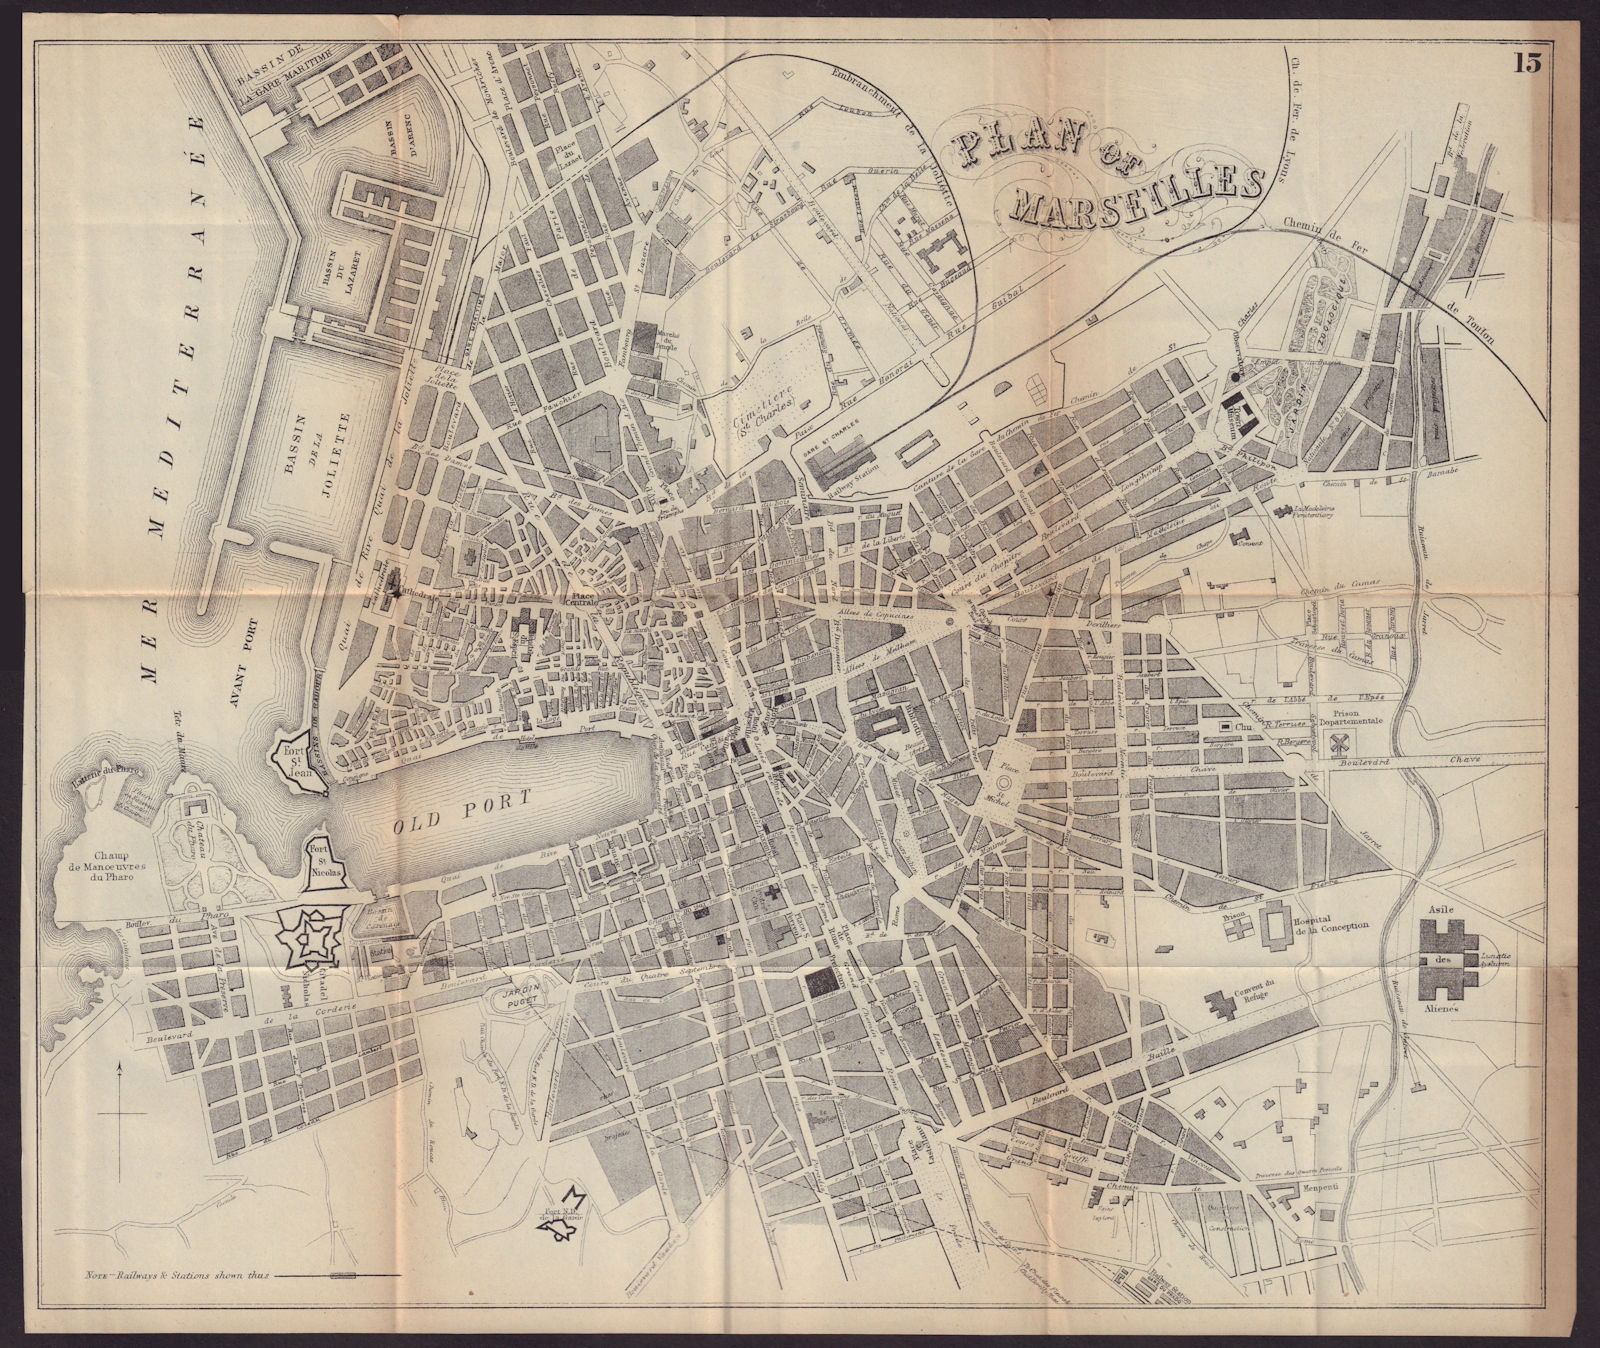 MARSEILLES antique town plan city map. France. BRADSHAW 1893 old